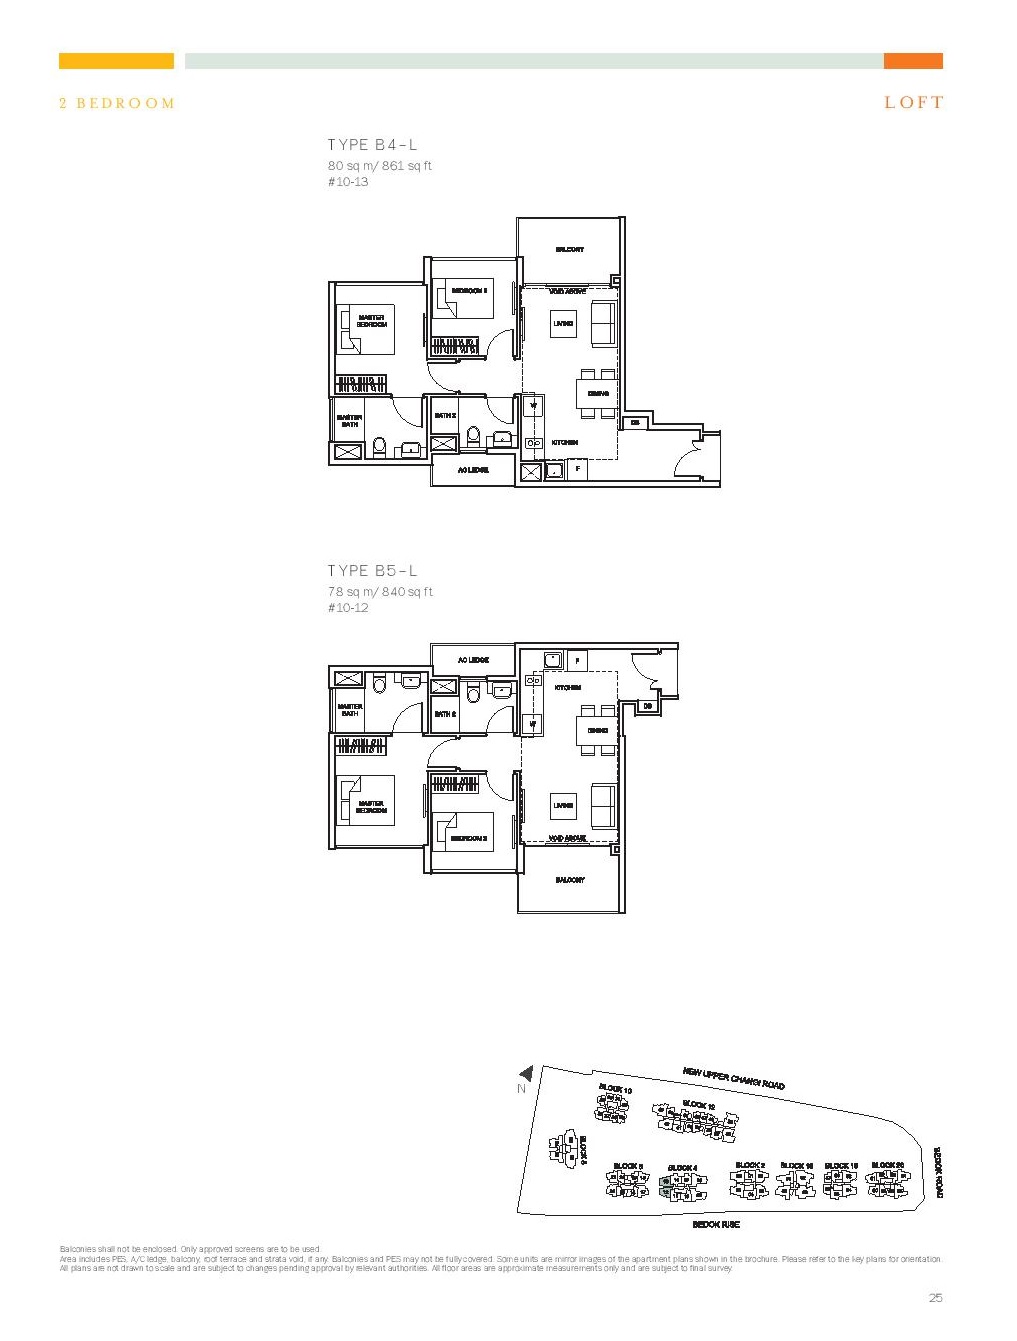 The Glades @ Tanah Merah 2 Bedroom Loft Floor Type B4-L, B5-L Plans